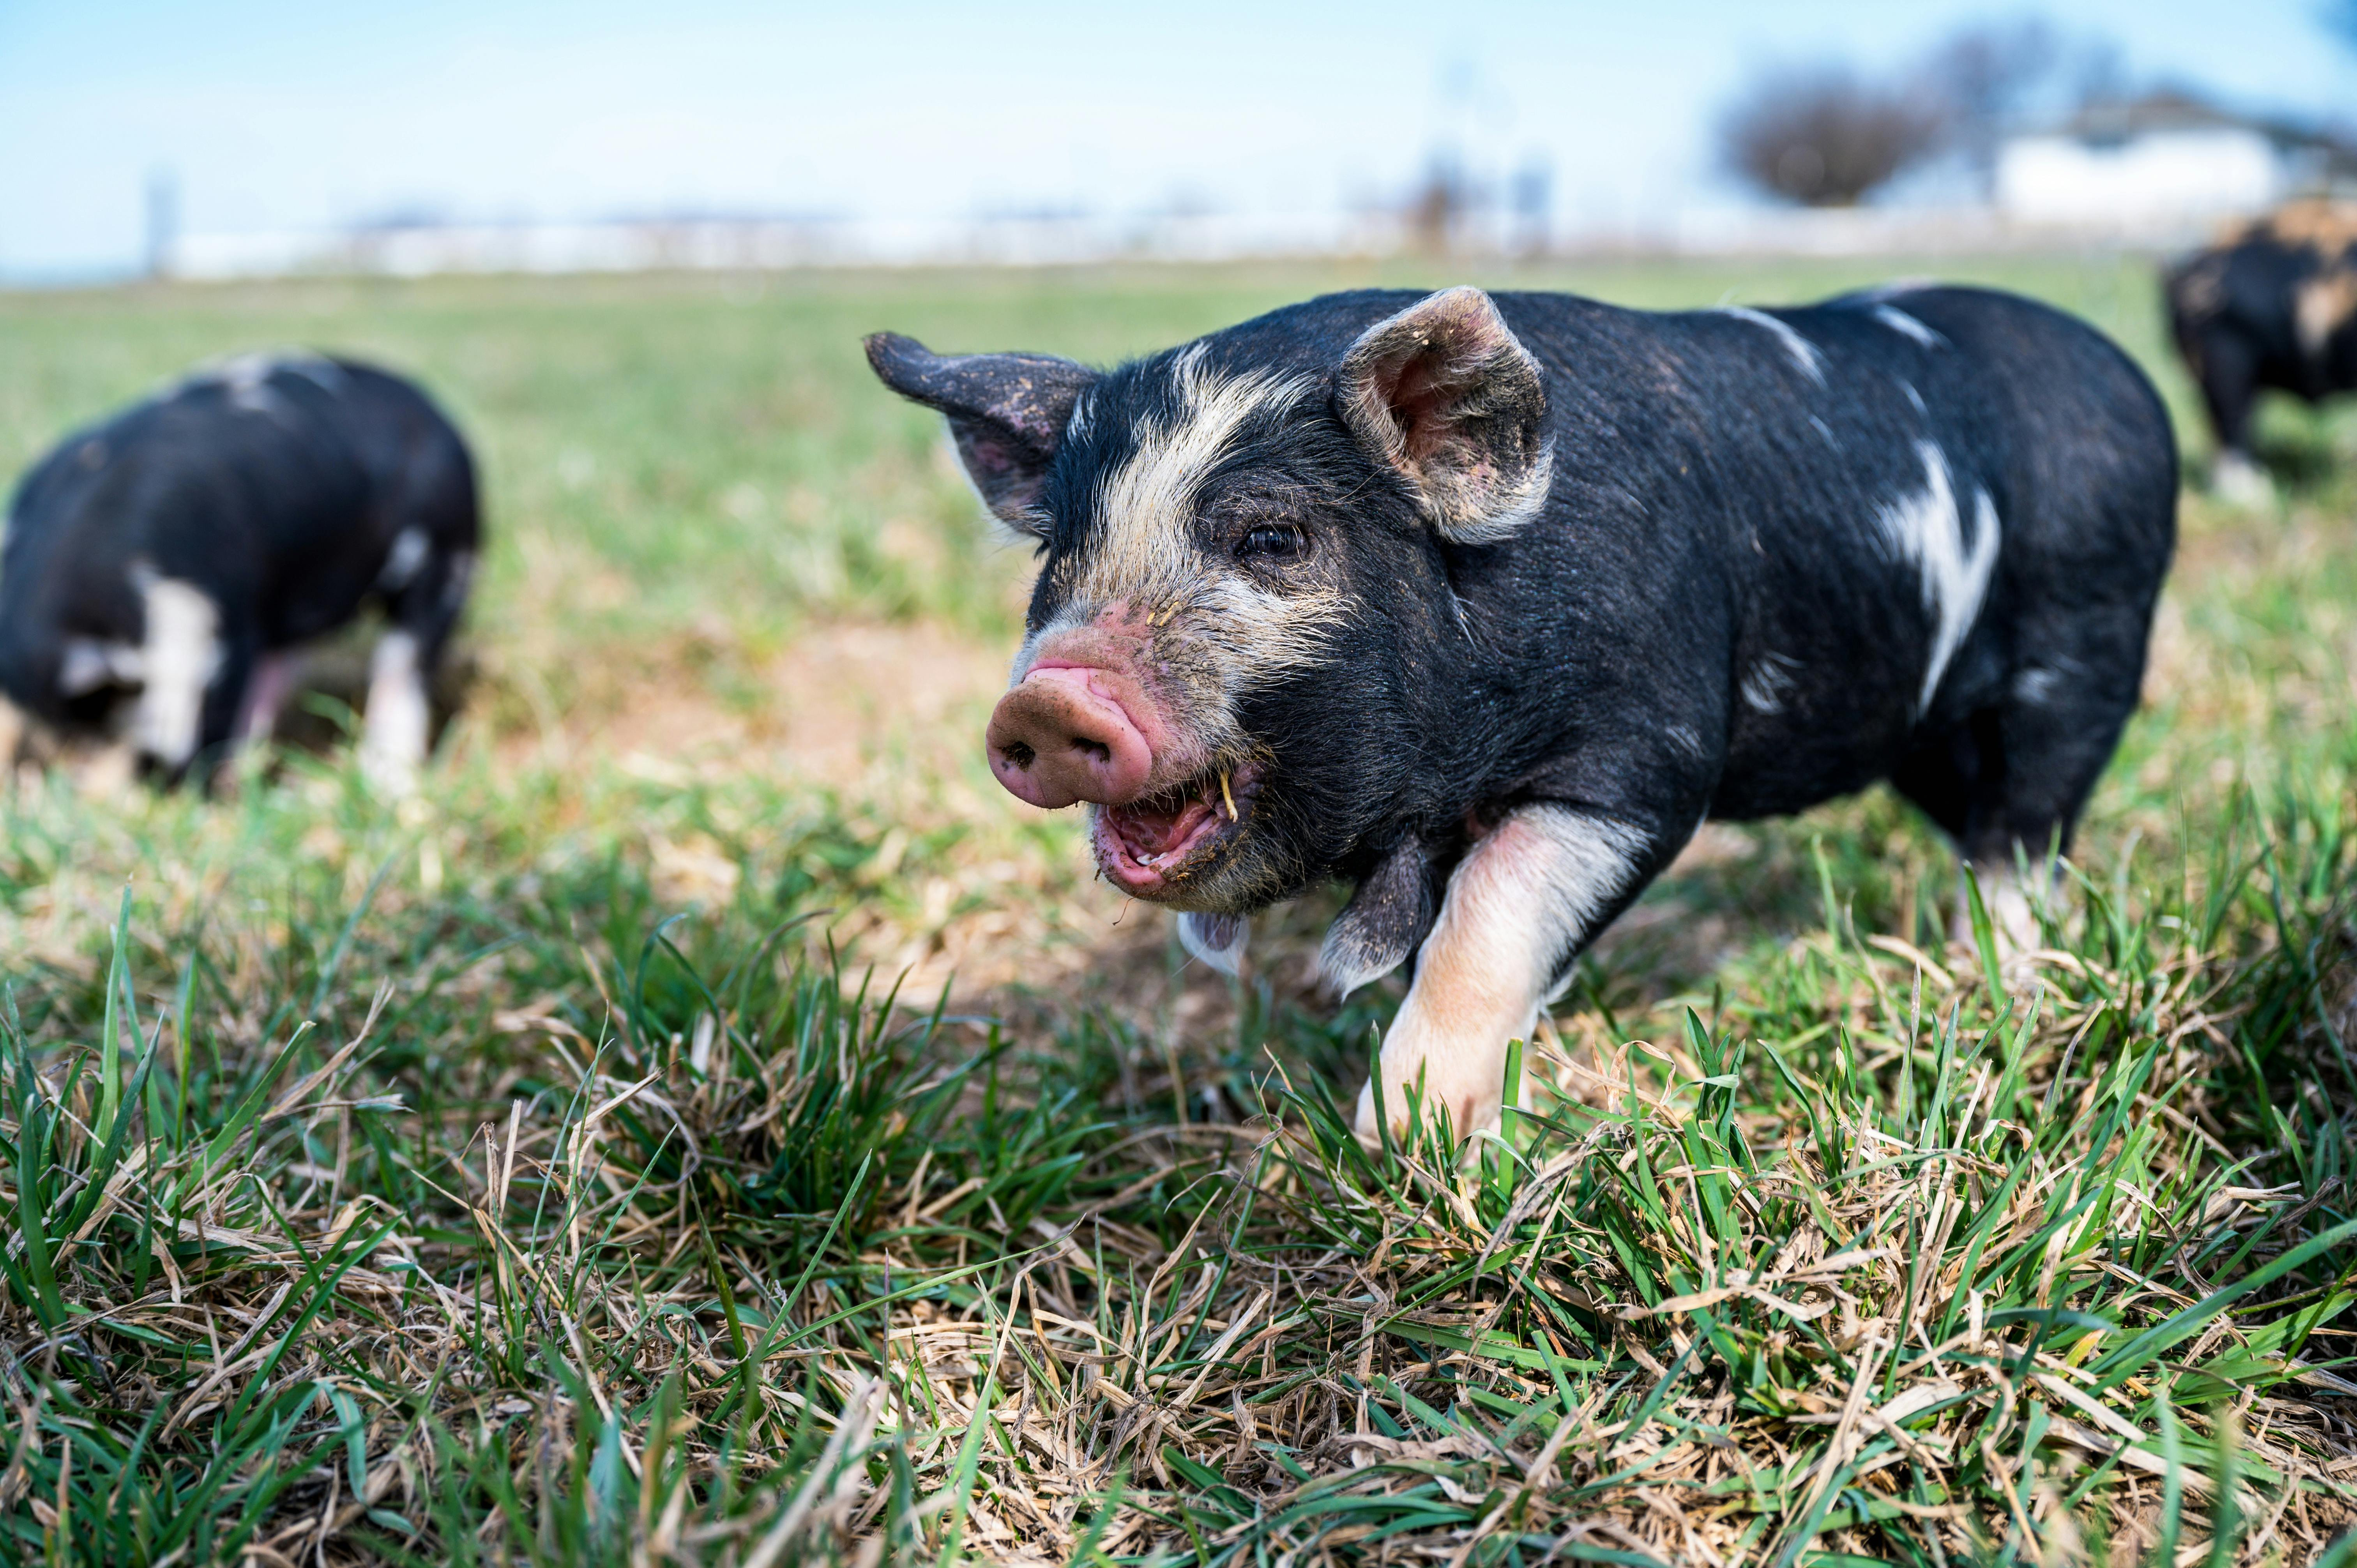 domestic mini pigs grazing in field in daytime